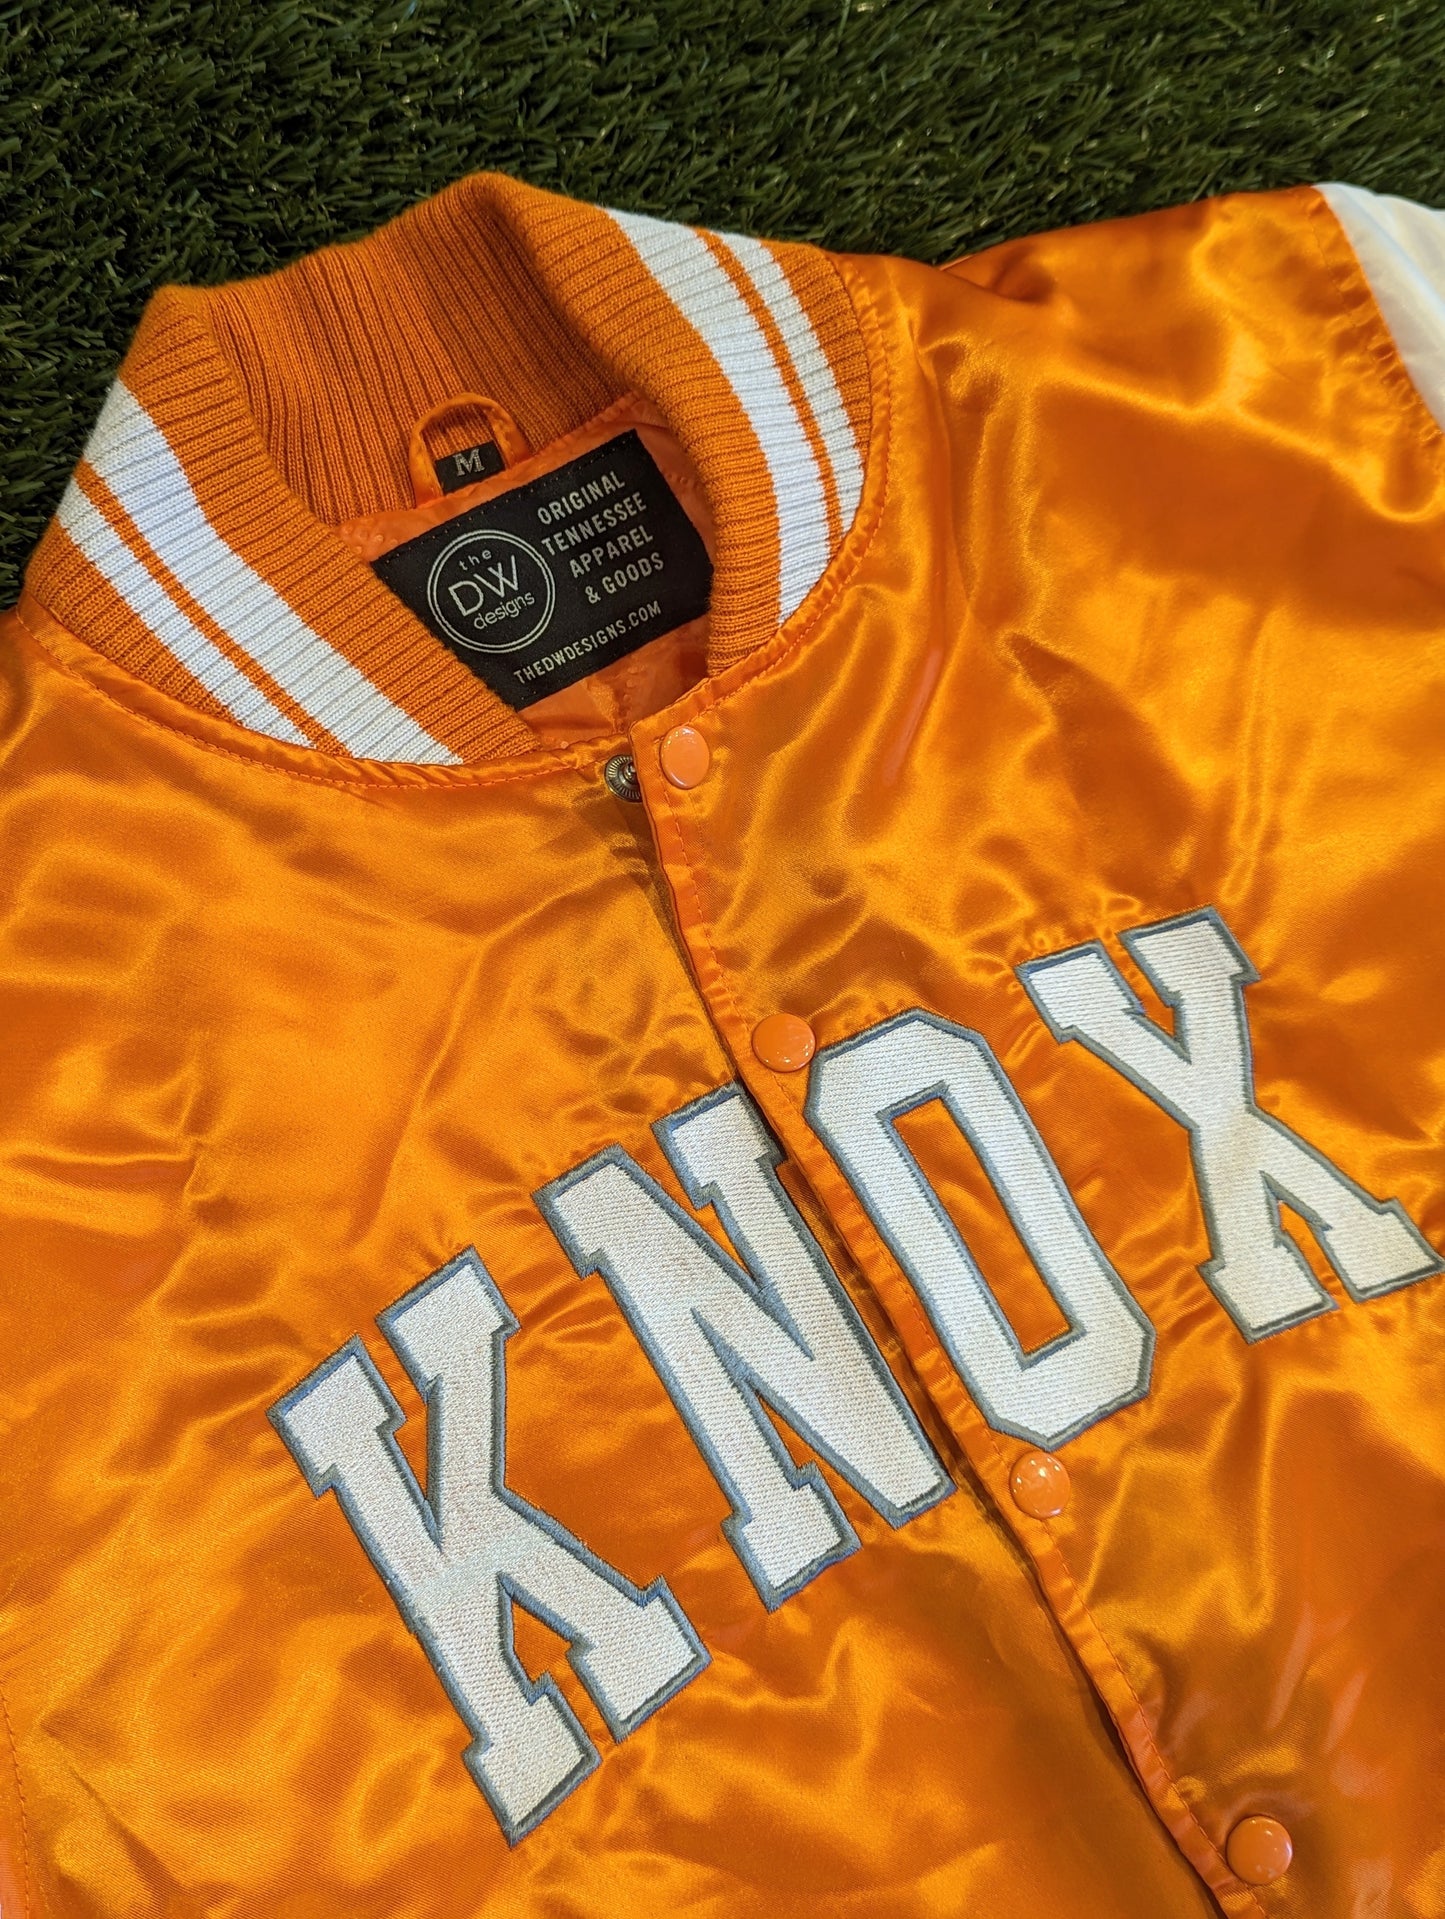 The DW KNOX Satin Jacket